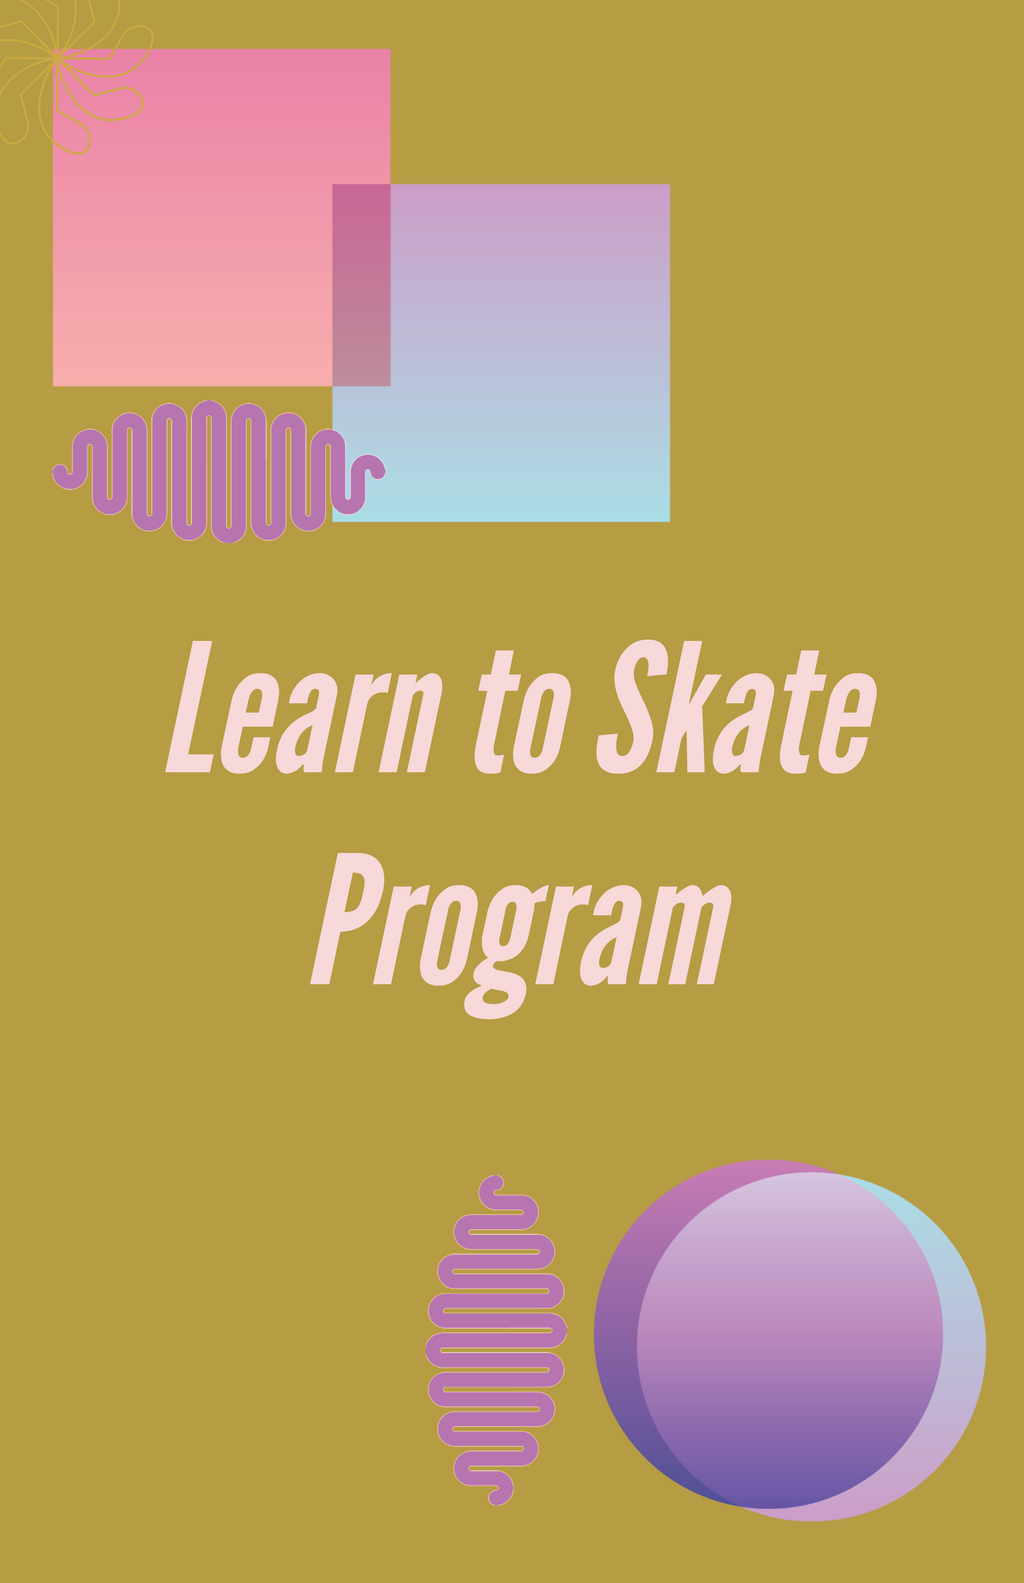 Learn to Skate 4 Week Program